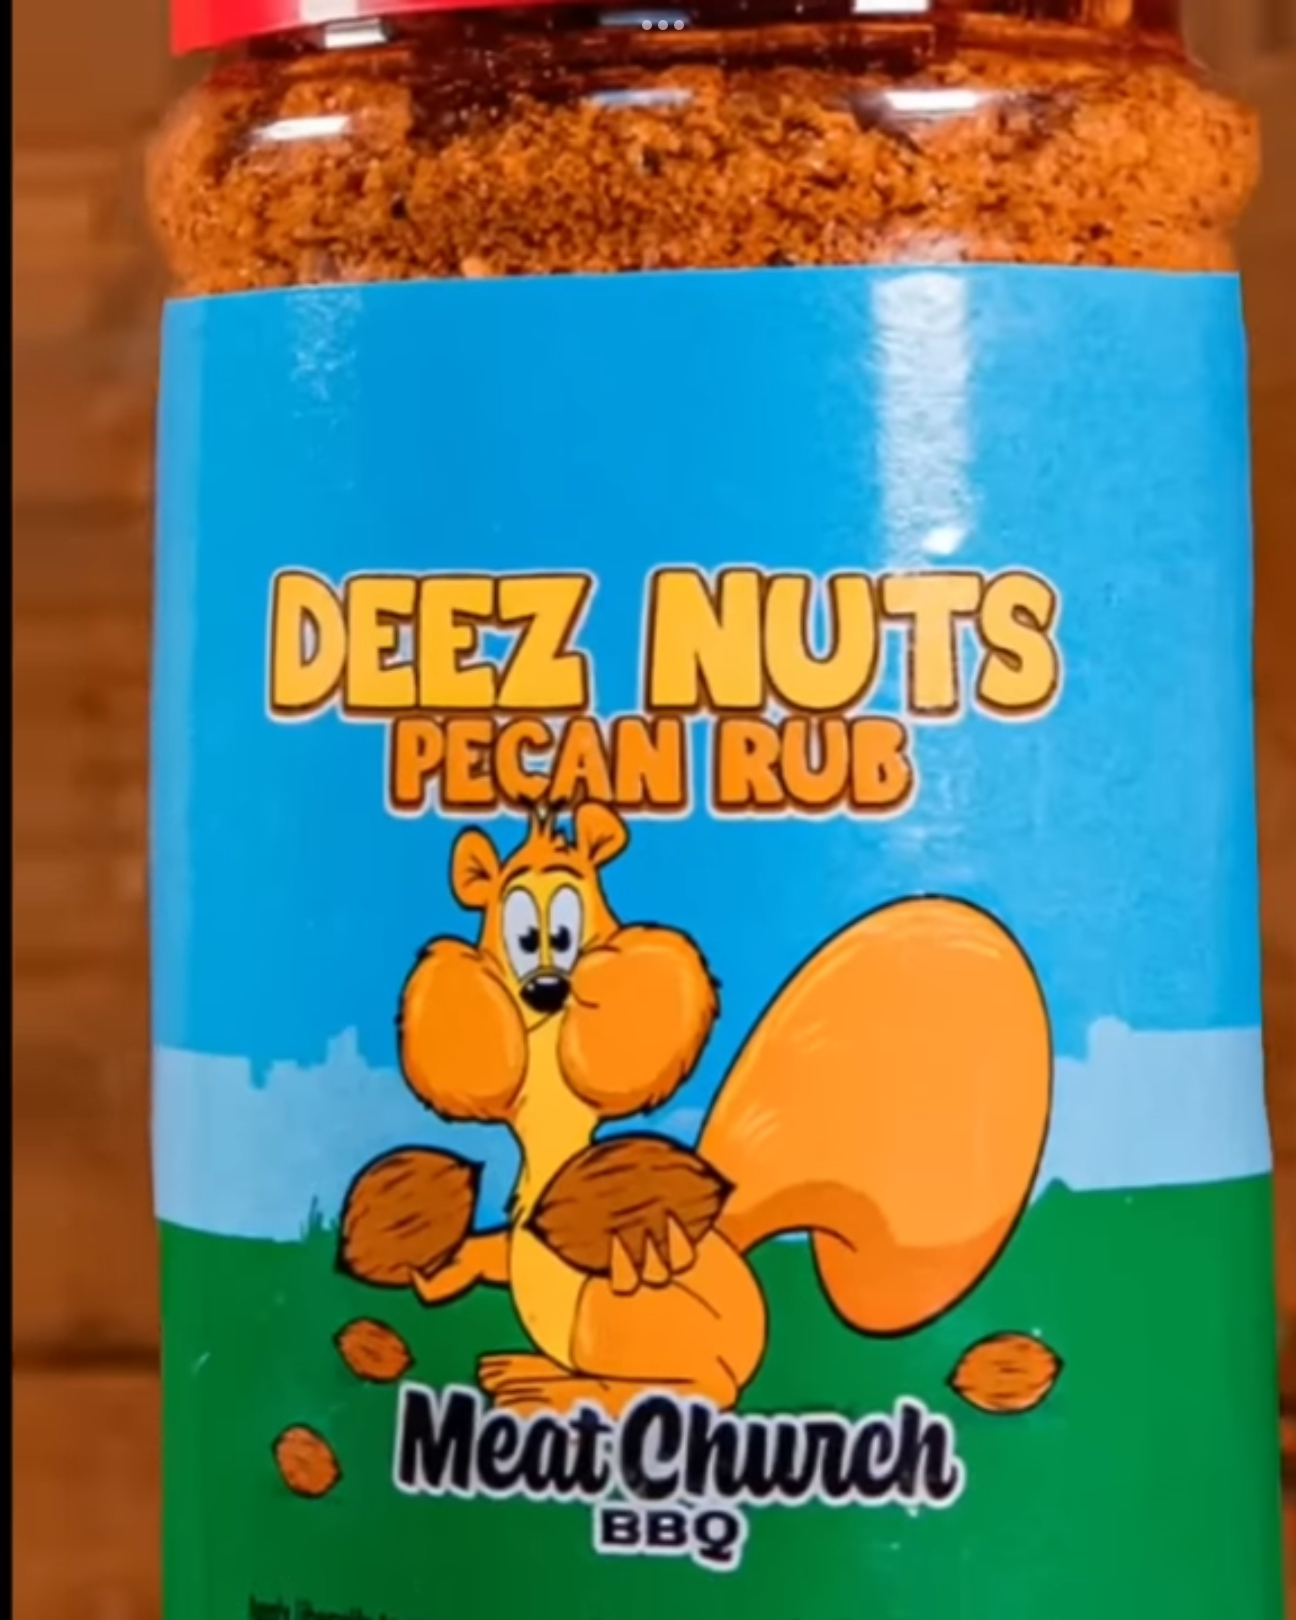 Cdeez nuts